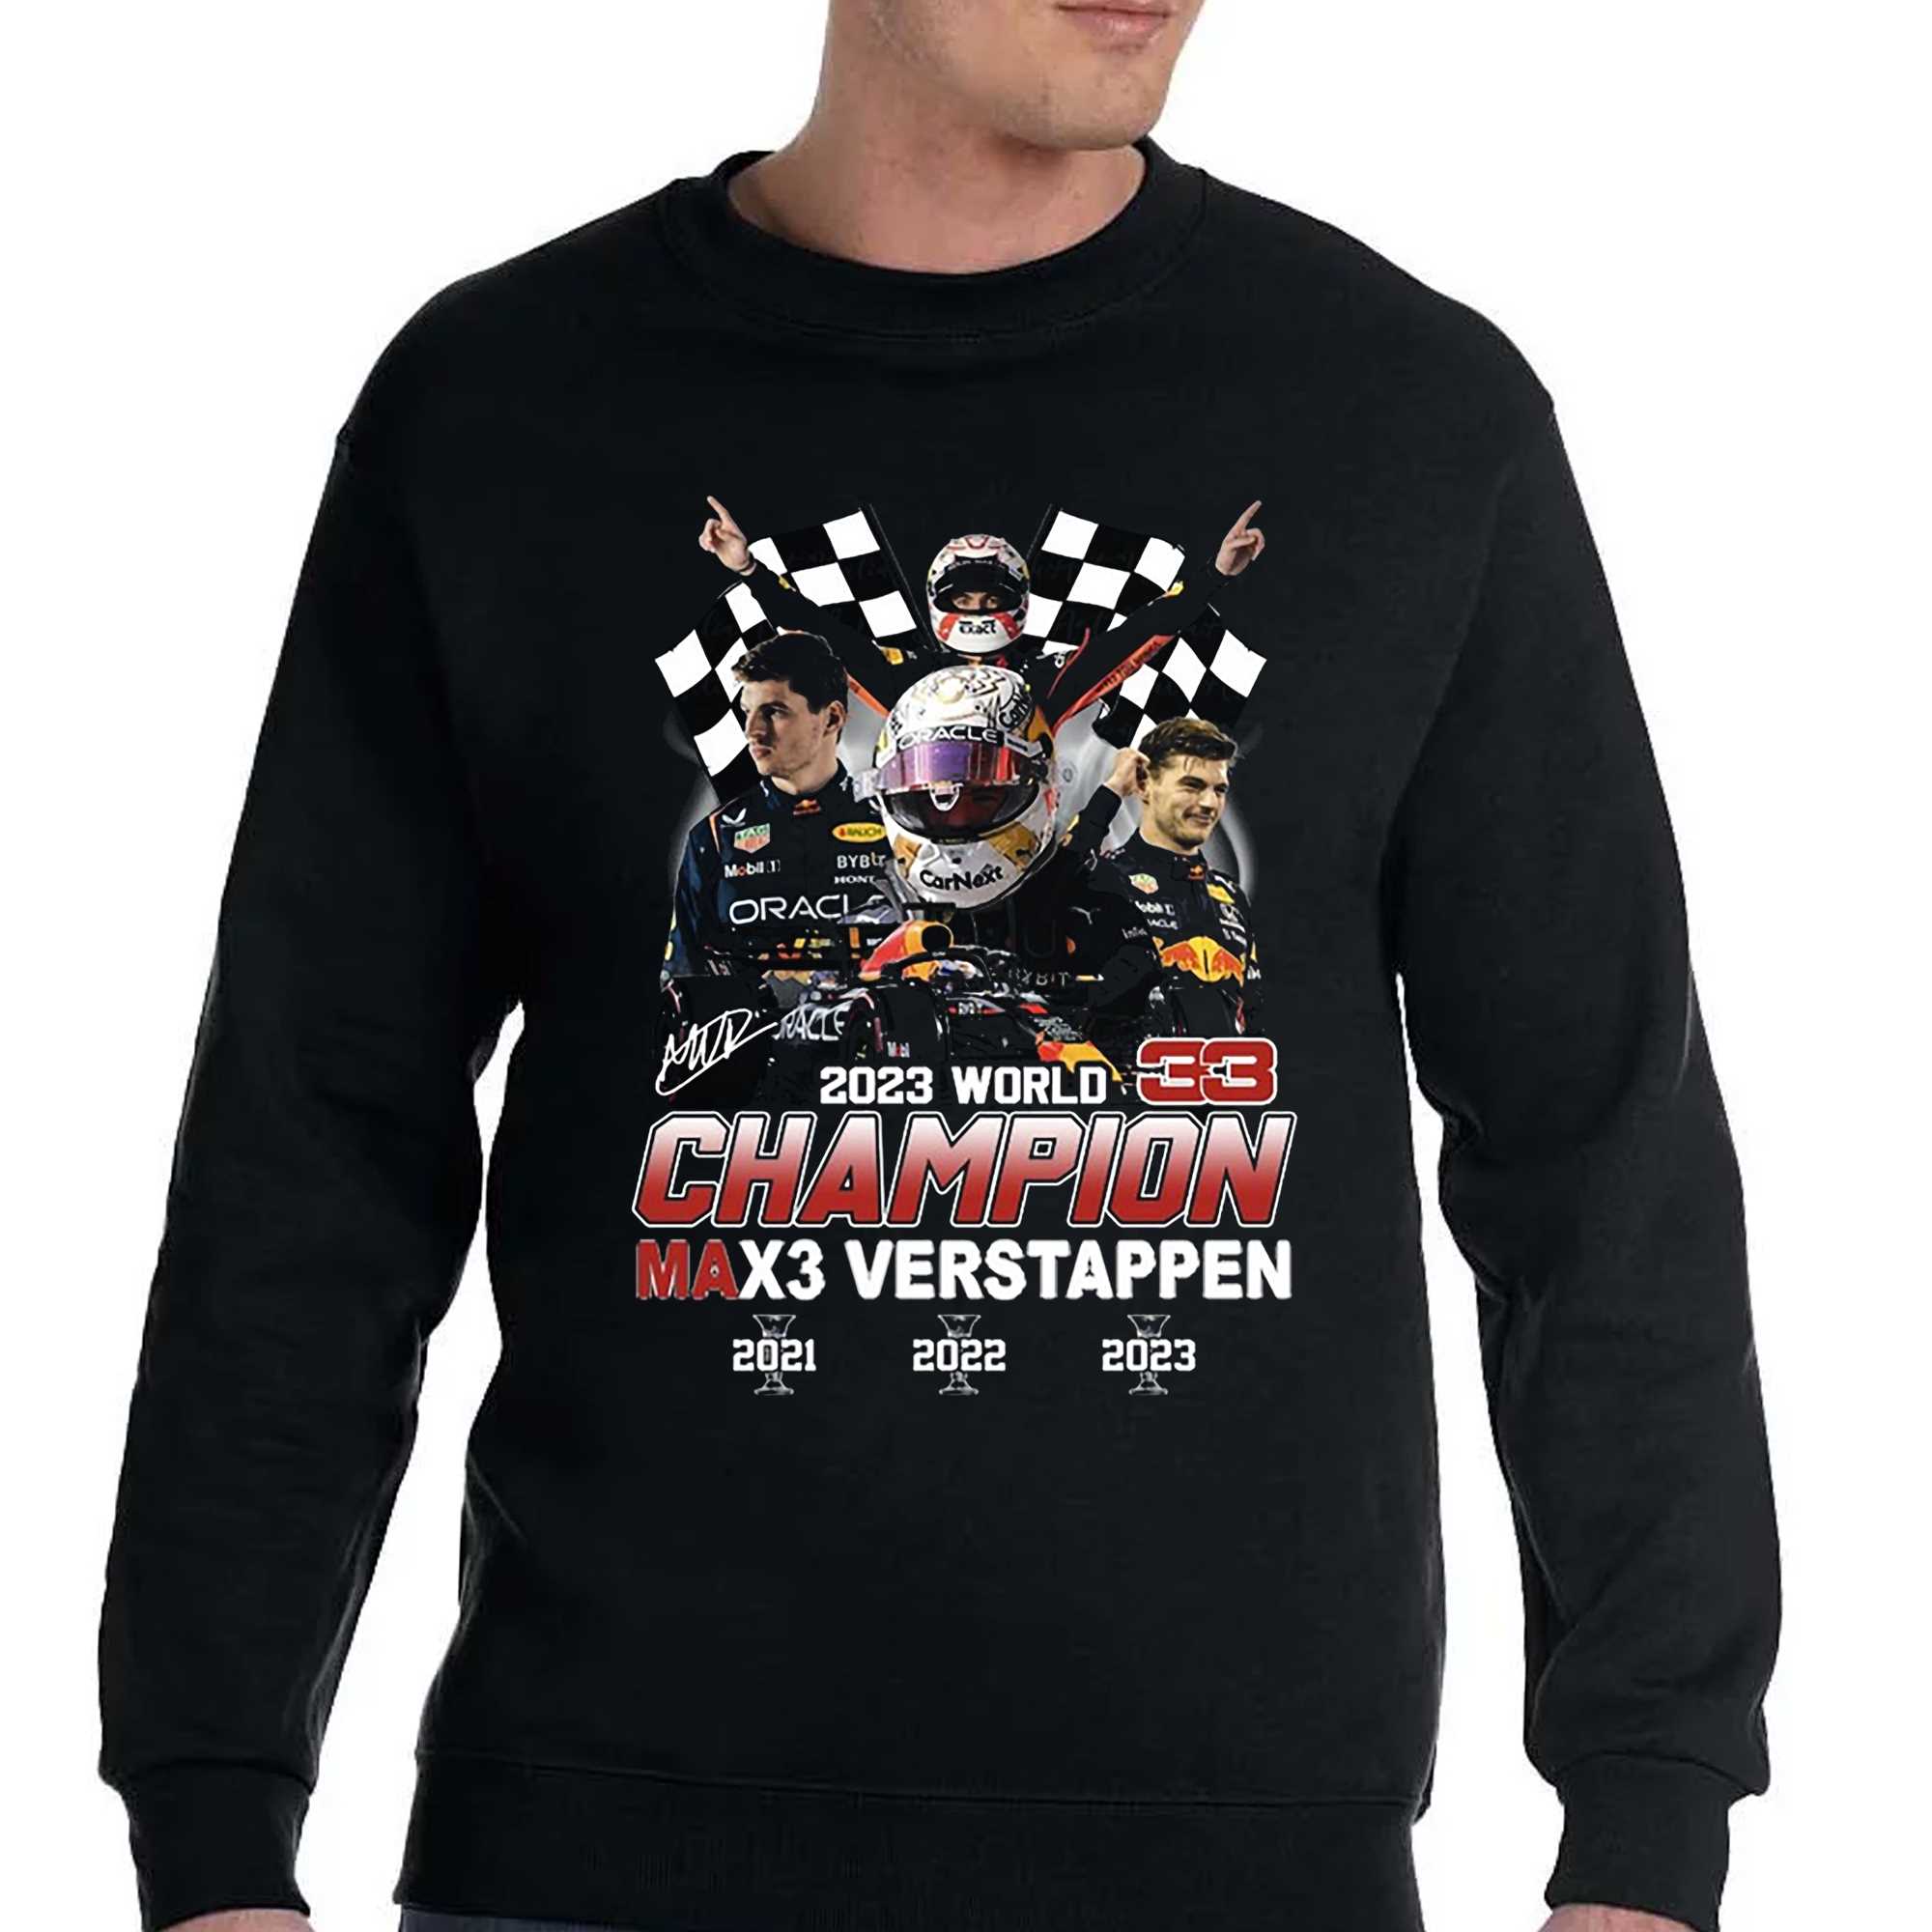 Max Verstappen 3 Times World Champion T-shirt - Shibtee Clothing